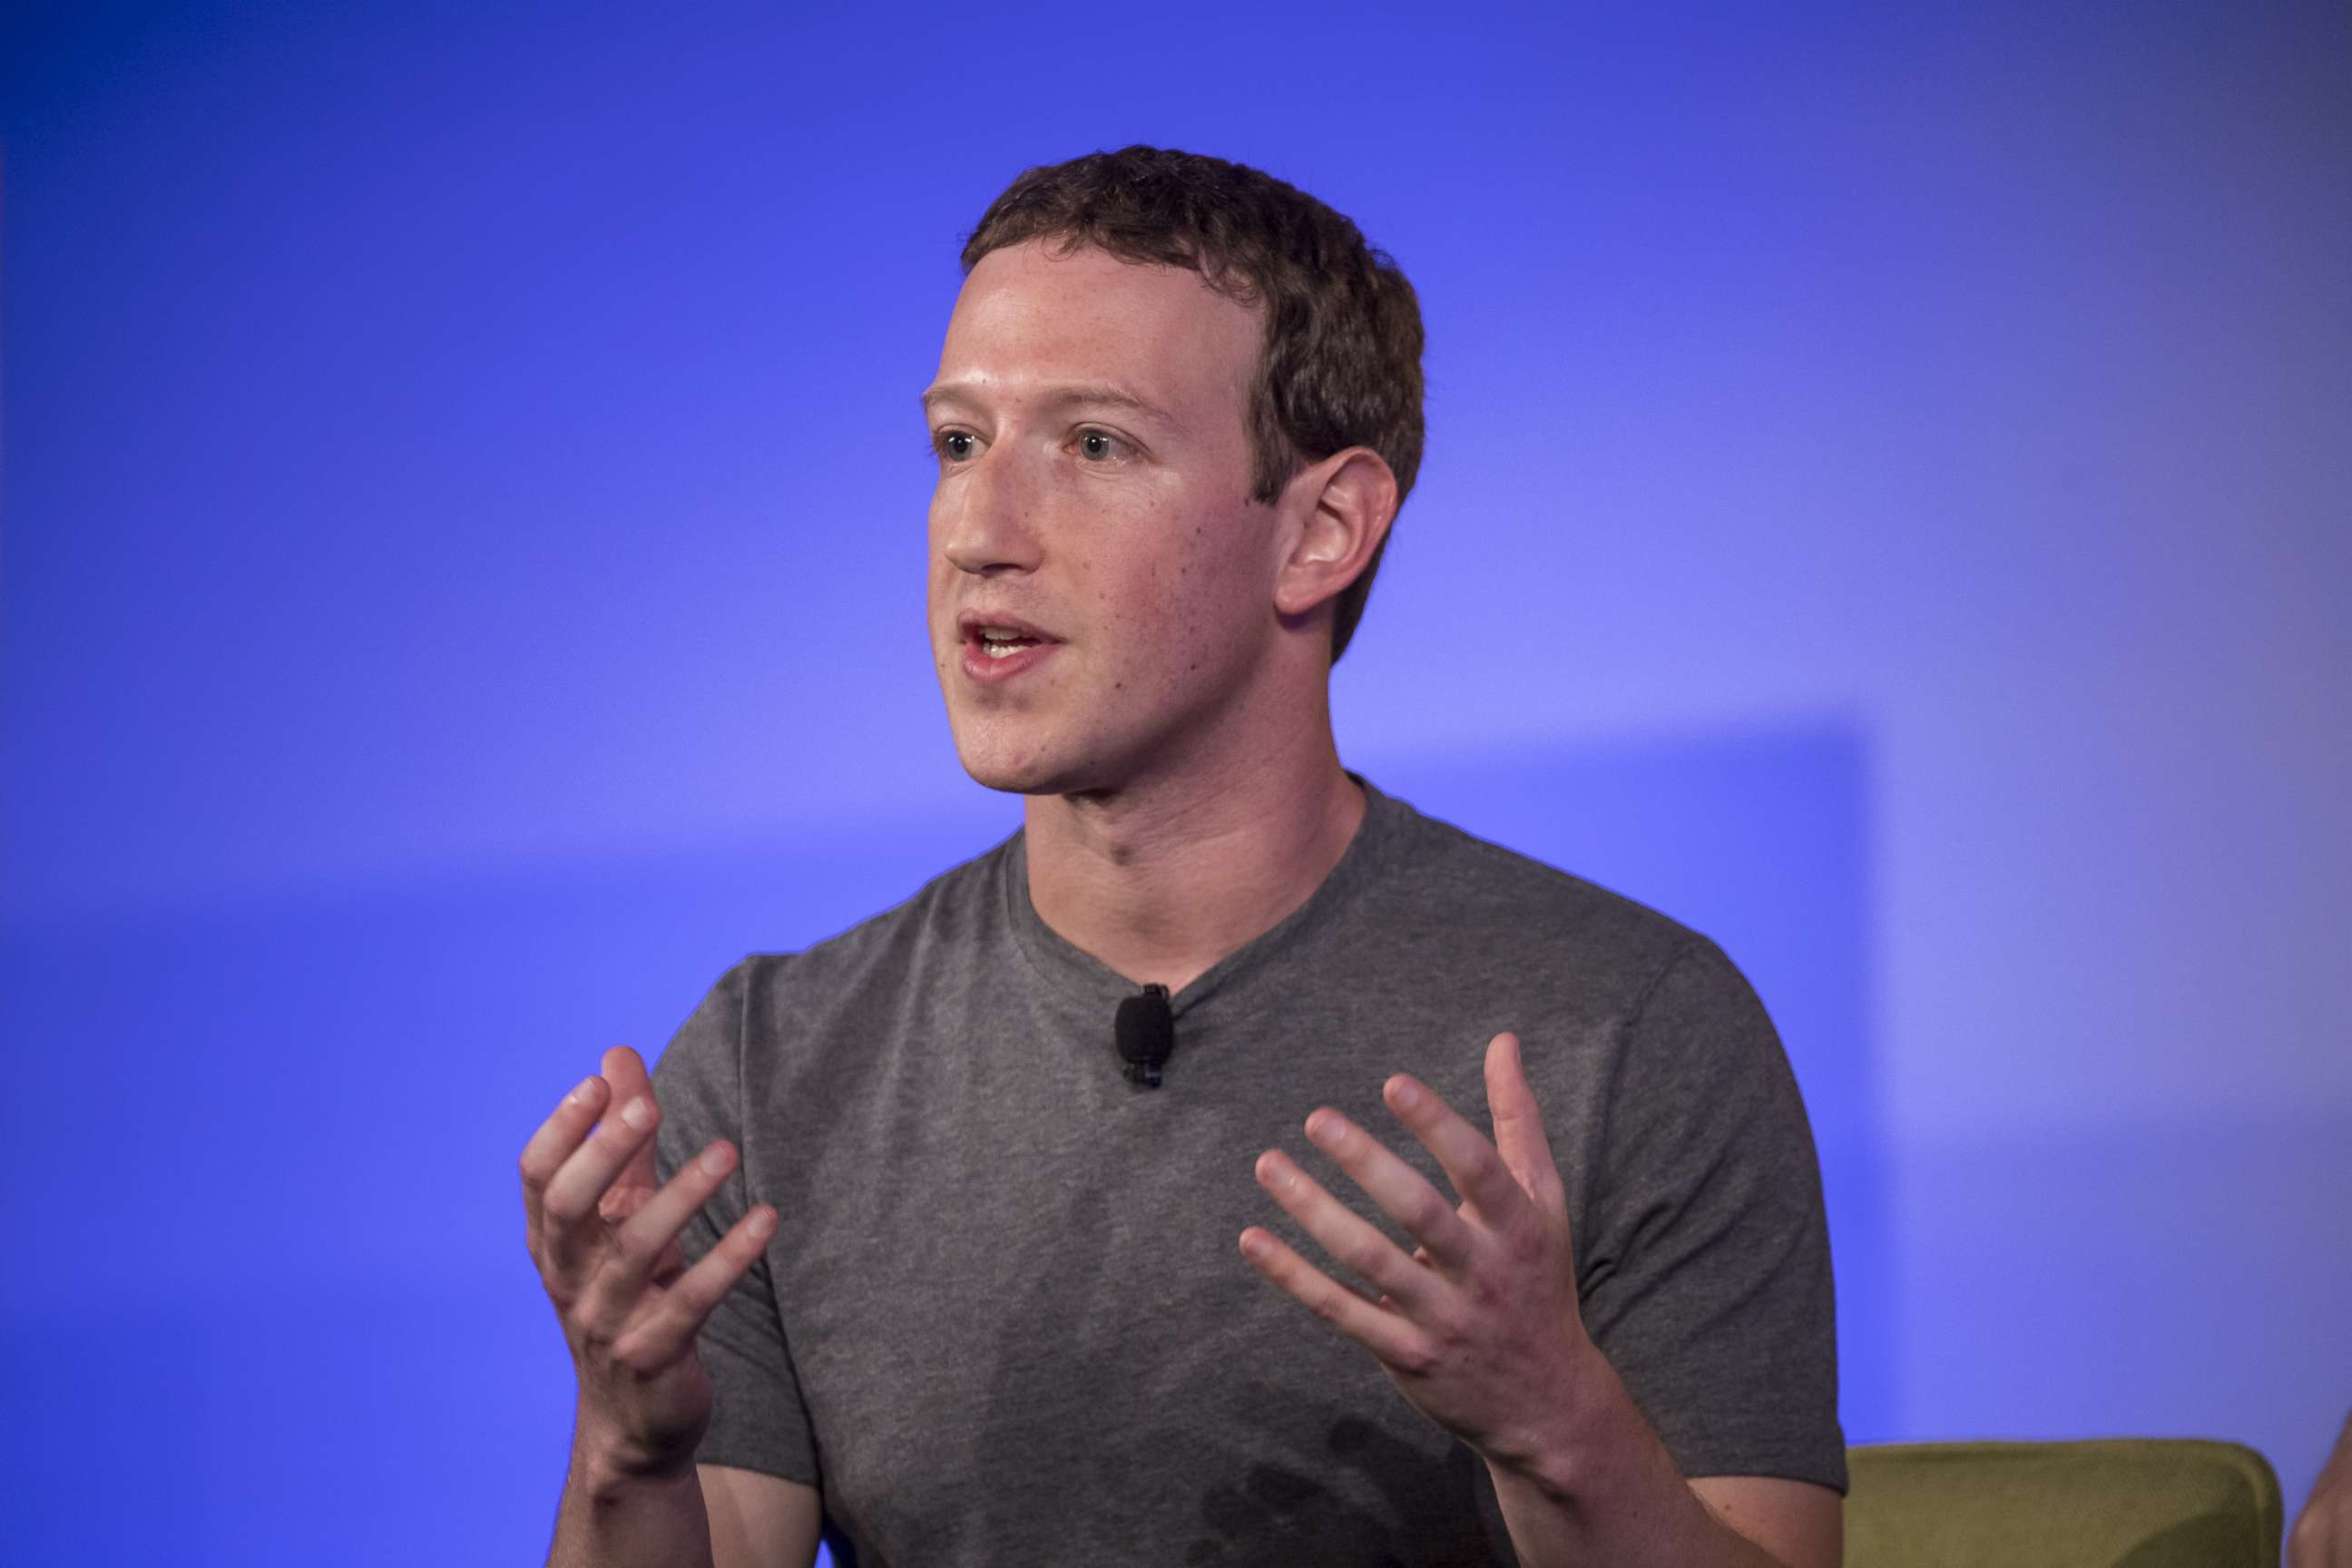 PHOTO: Mark Zuckerberg of Facebook Inc. speaks during an event in Half Moon Bay, Calif., Nov. 10, 2016.